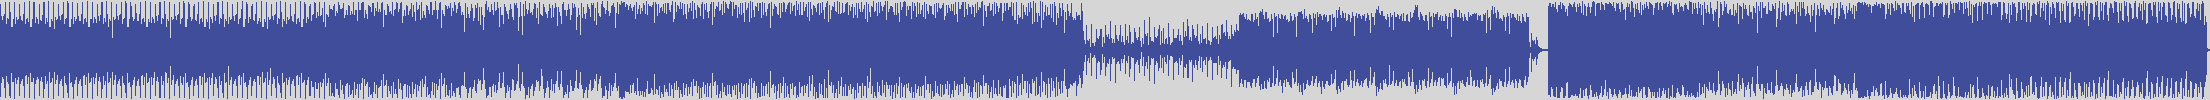 nf_boyz_records [NFY017] Jona Wilmer - Face On [Original Mix] audio wave form